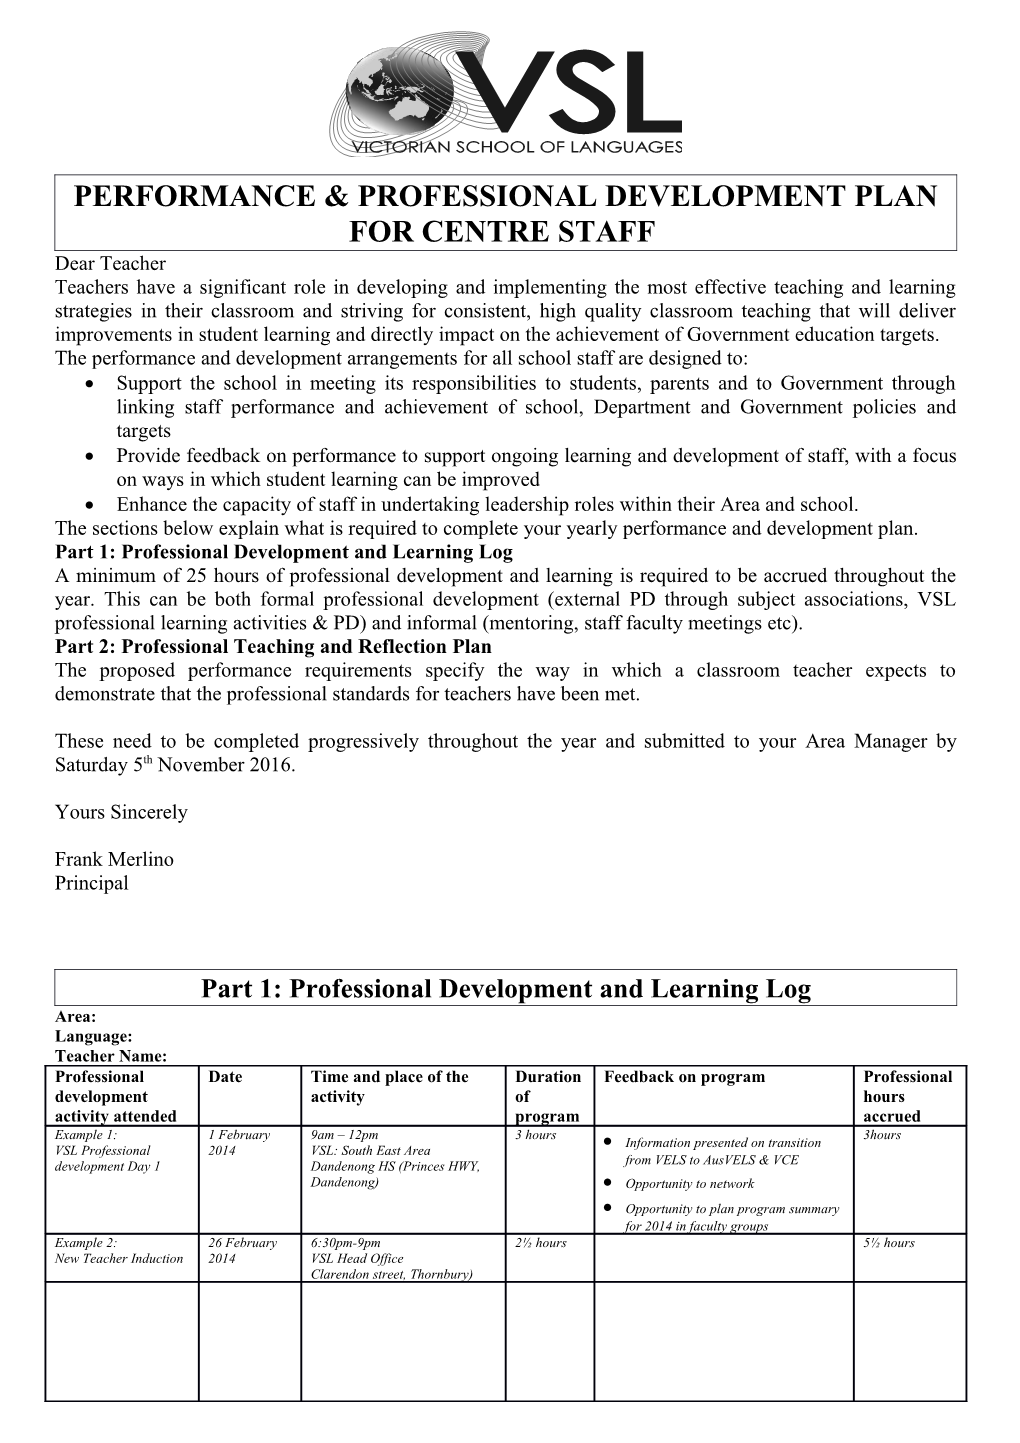 Performance & Professional Development Plan for Centre Staff